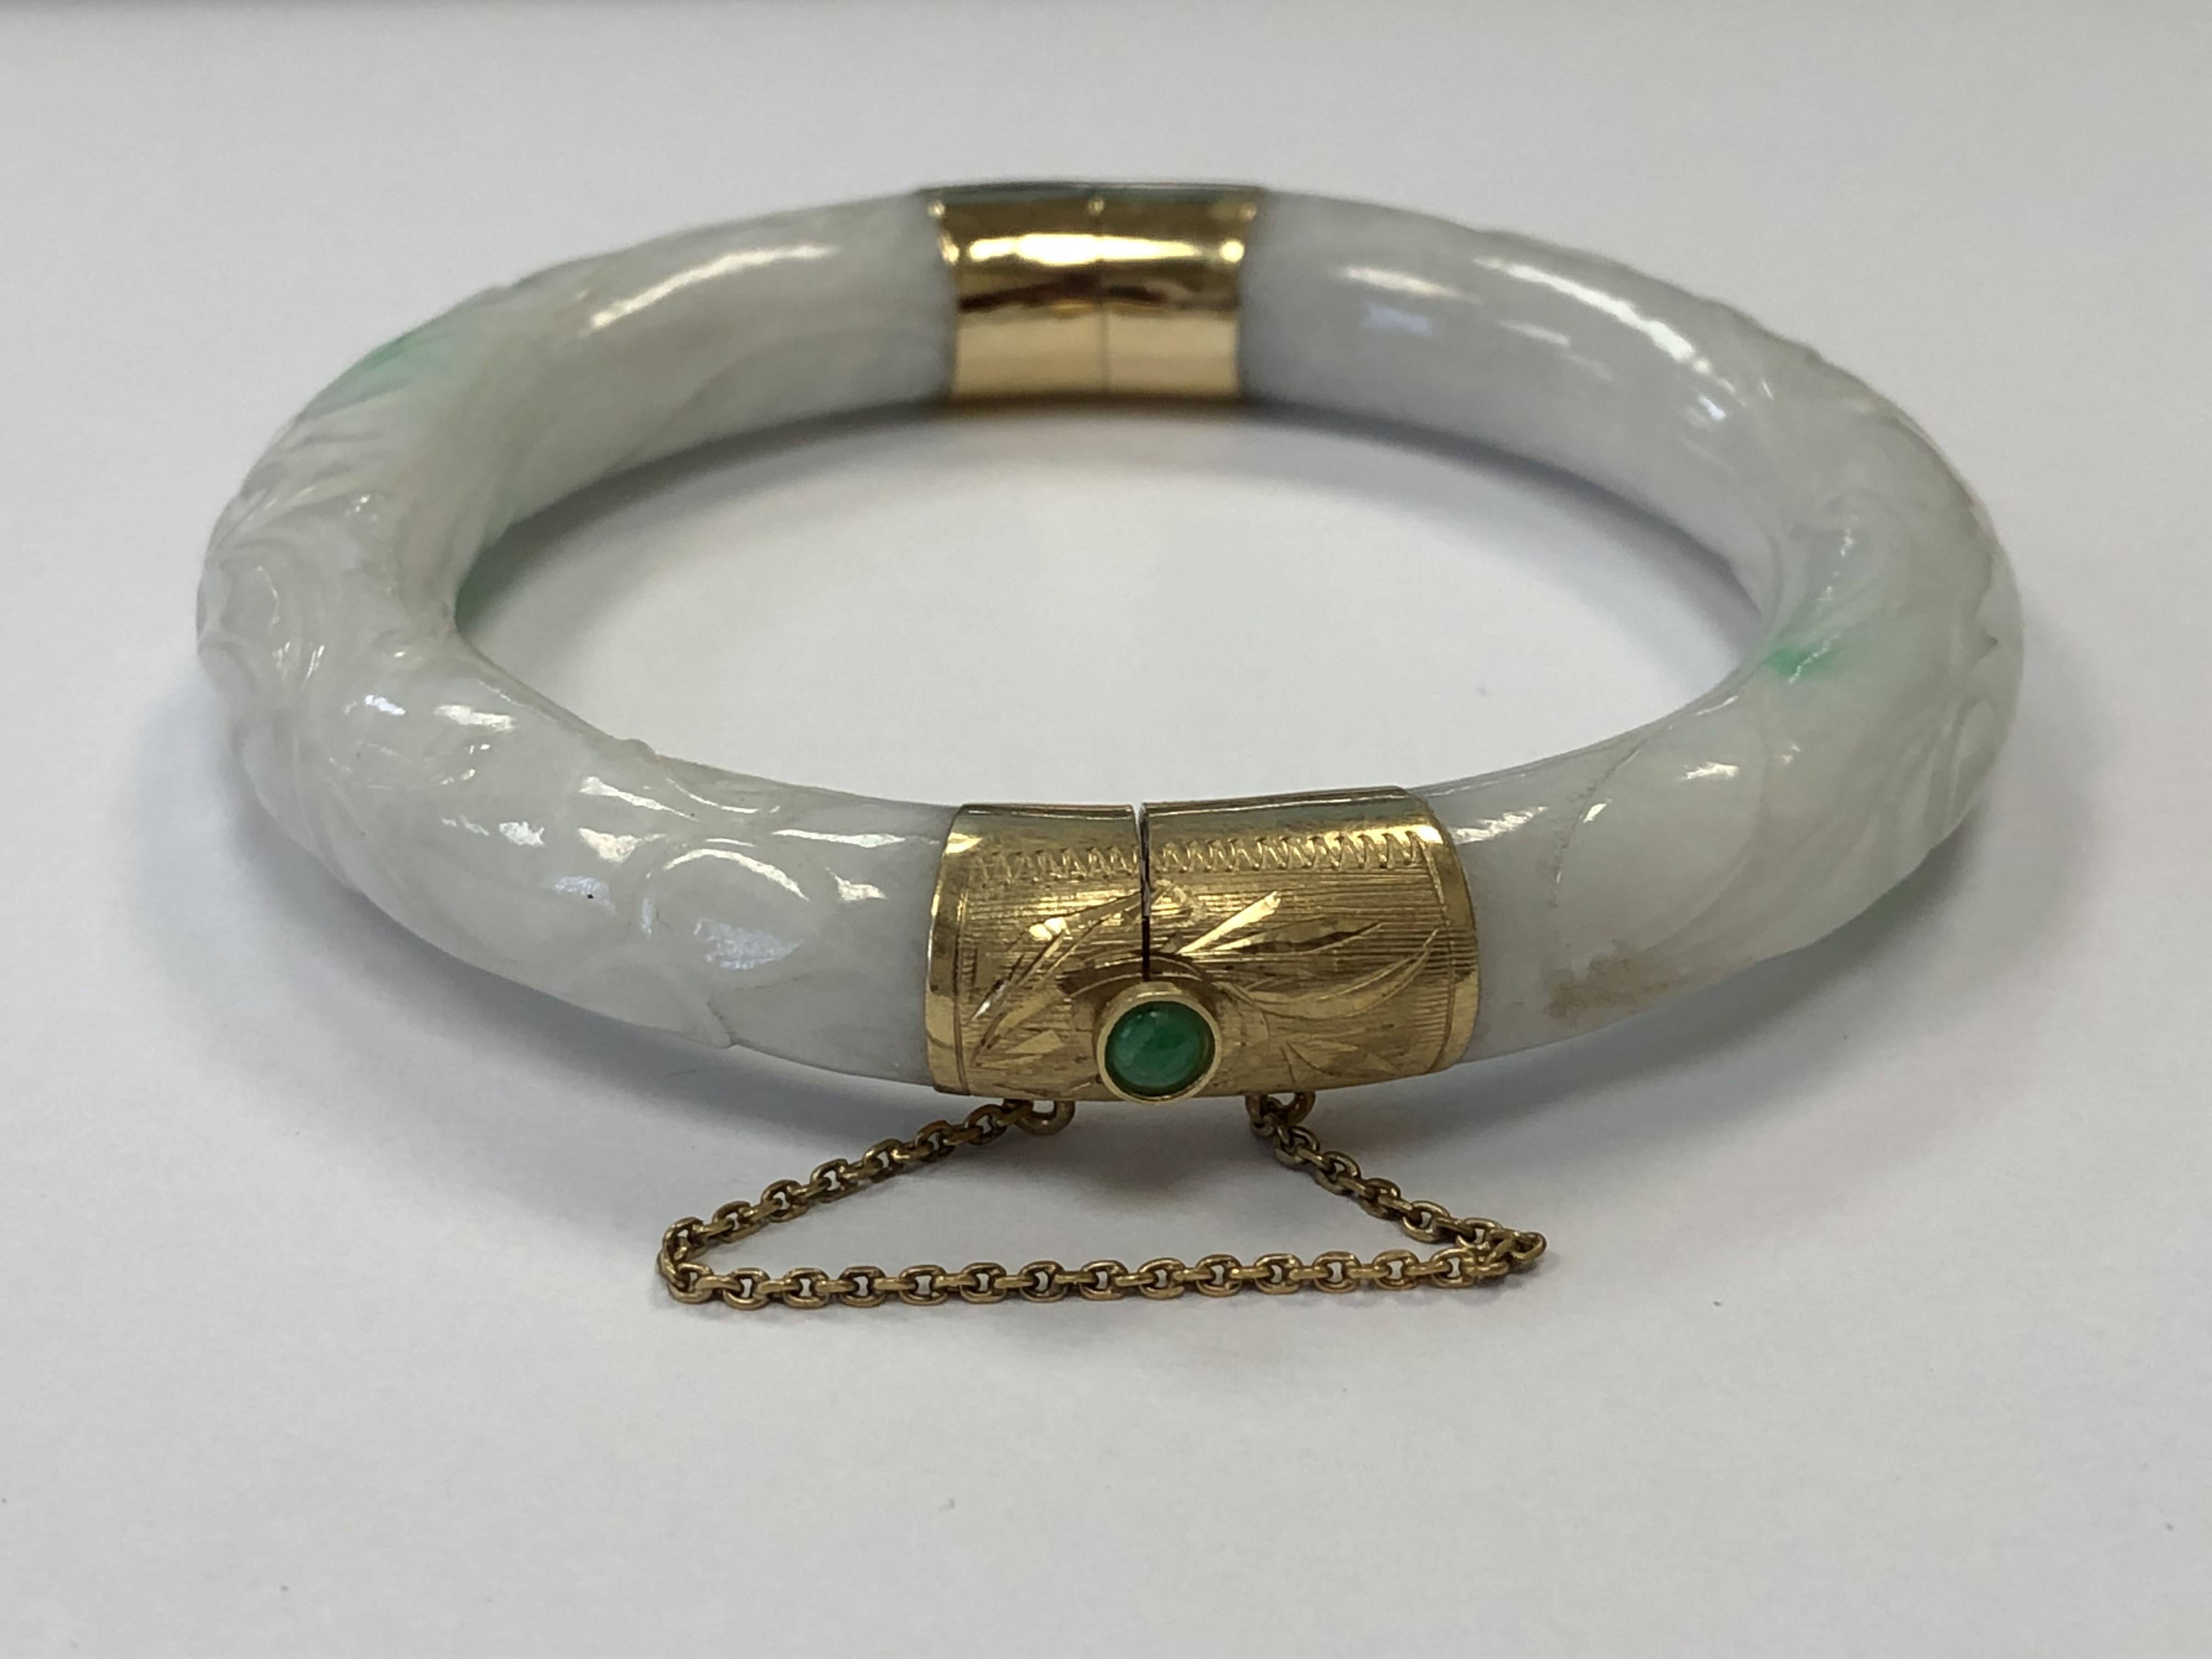 A jade bangle with high carat gold mounts